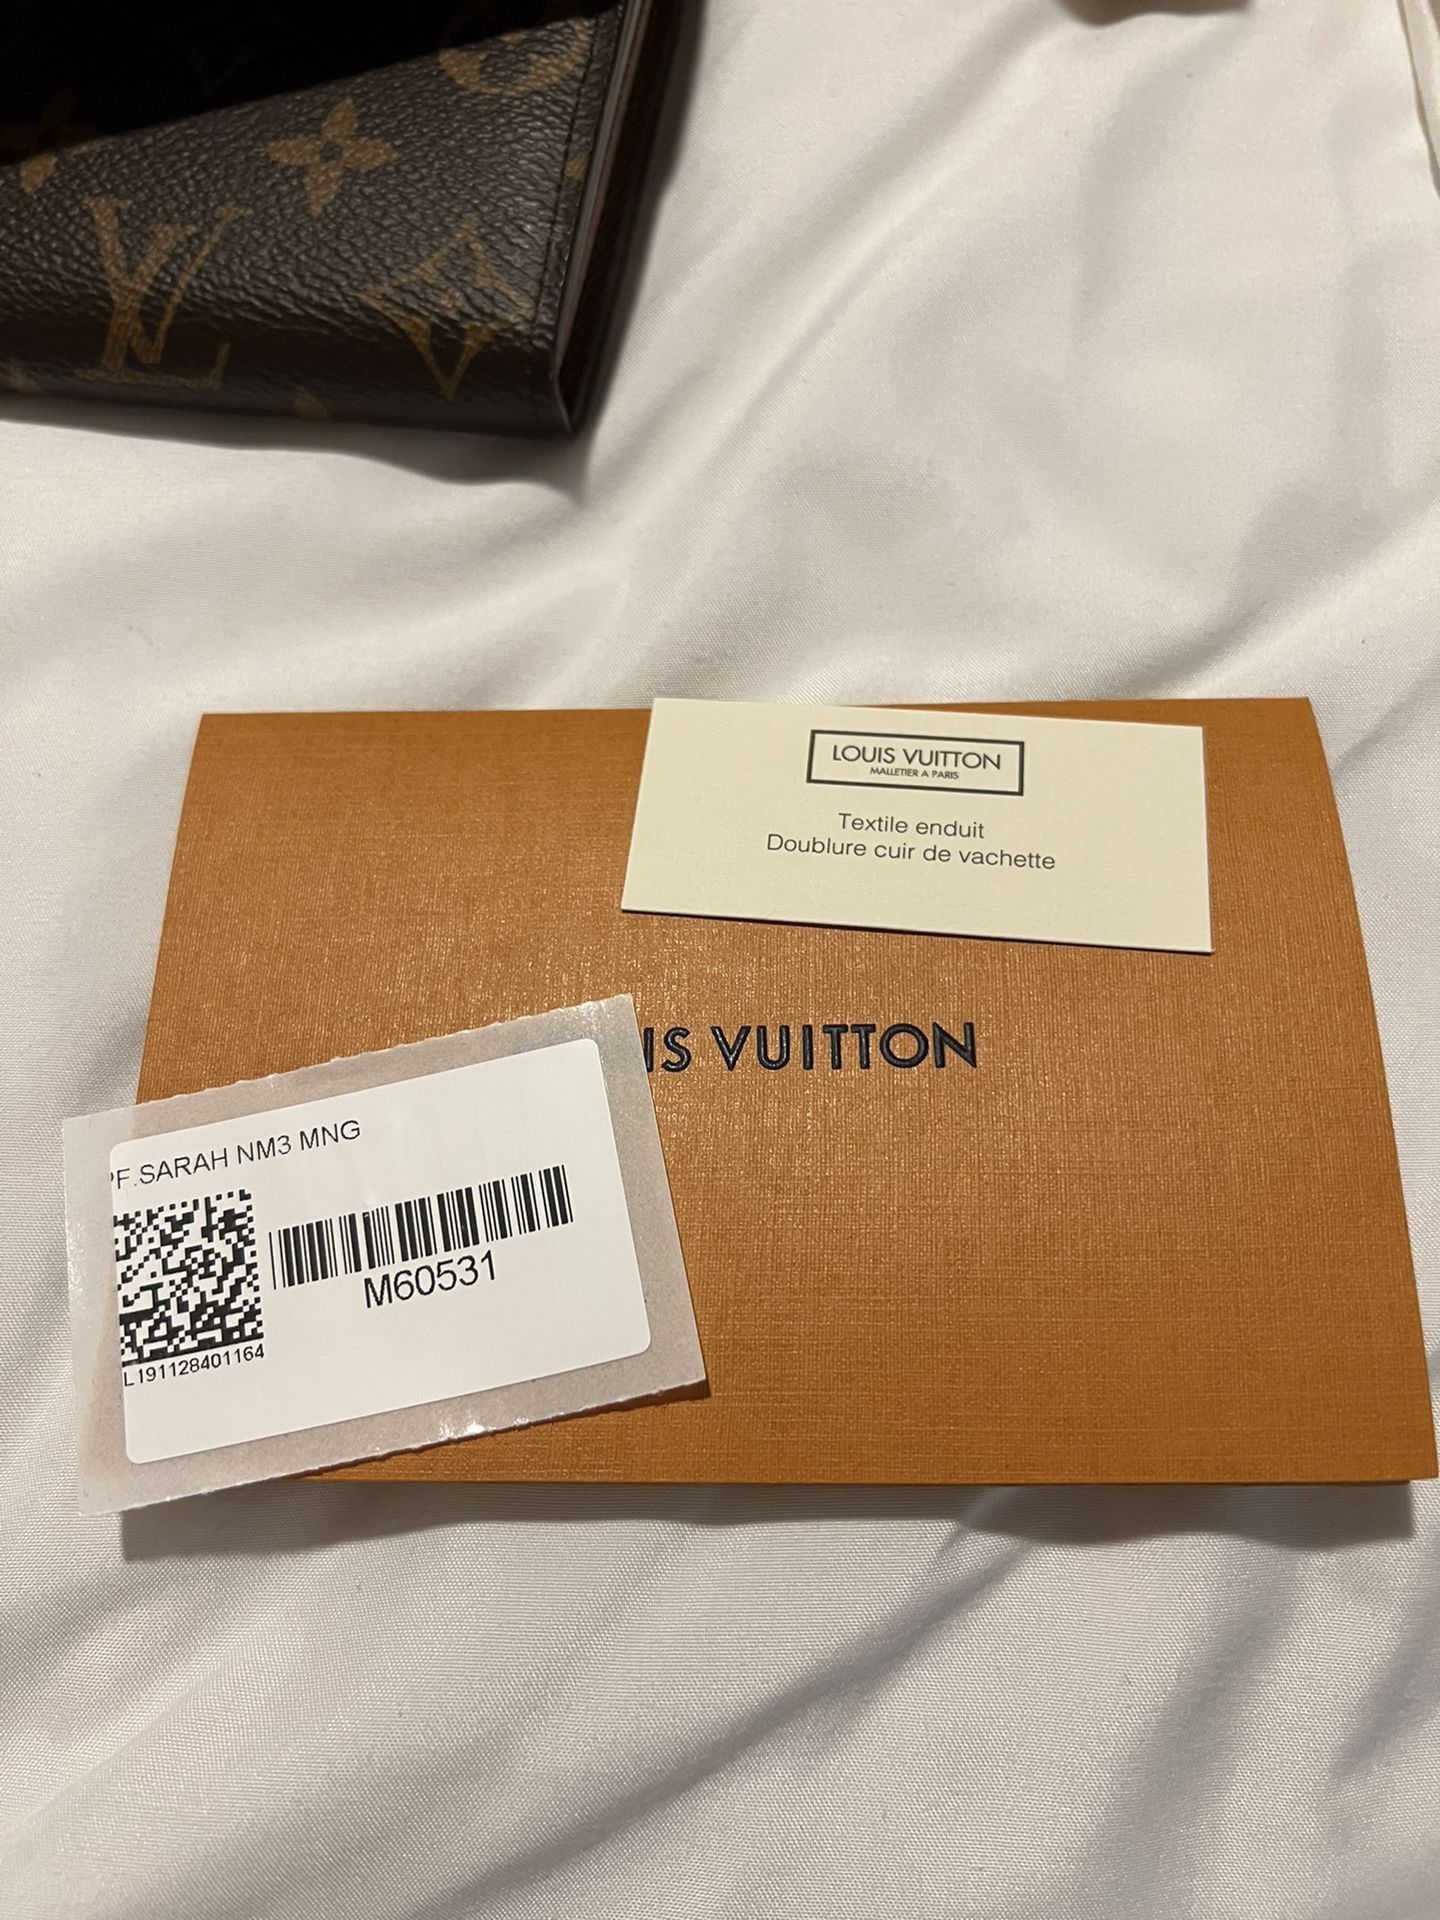 Authentic Louis Vuitton Vernis Sarah Wallet On Chain Crossbody Bag for Sale  in Surprise, AZ - OfferUp